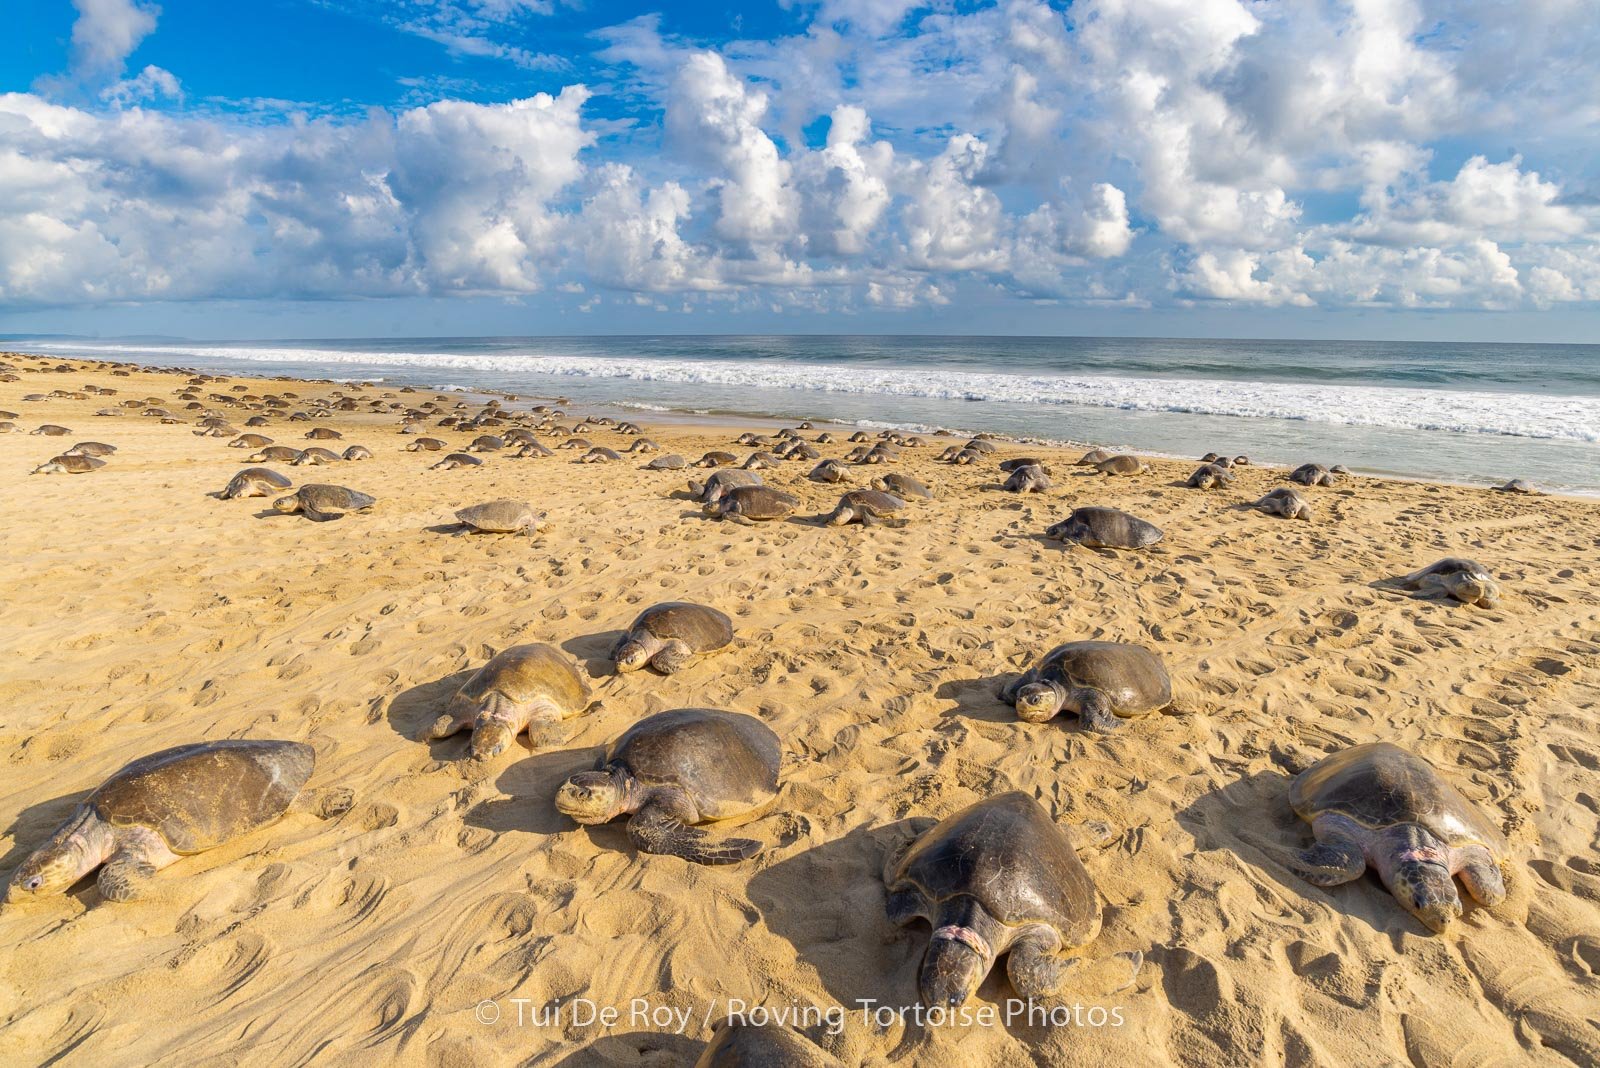  Arribada of olive ridley turtles at Escobilla Beach 